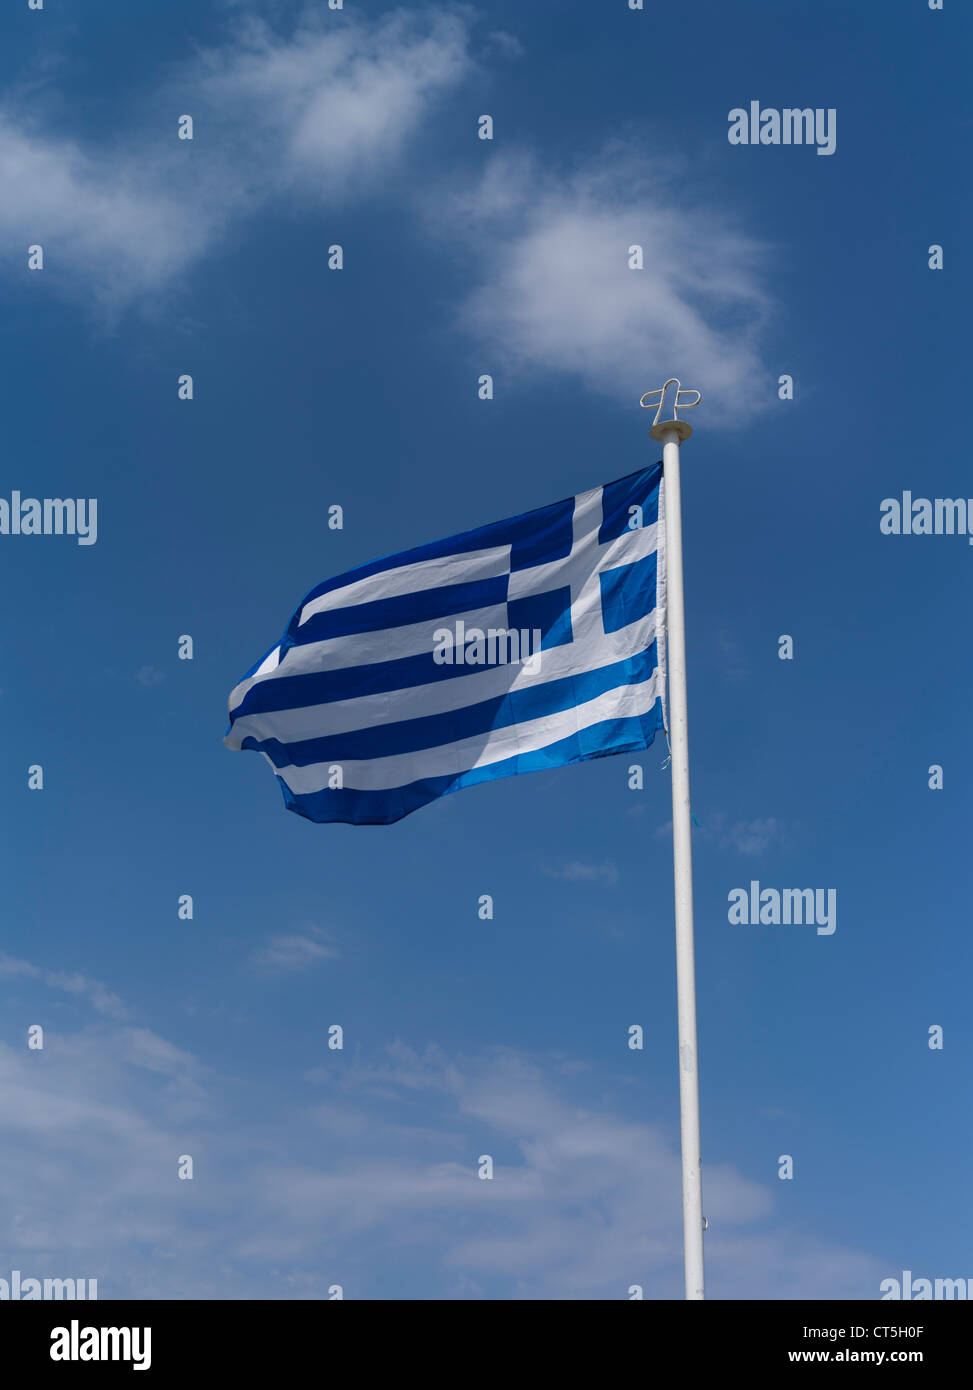 dh Greek flag FLAG CYPRUS Flag of Greece on white flagpole blue sky Stock Photo